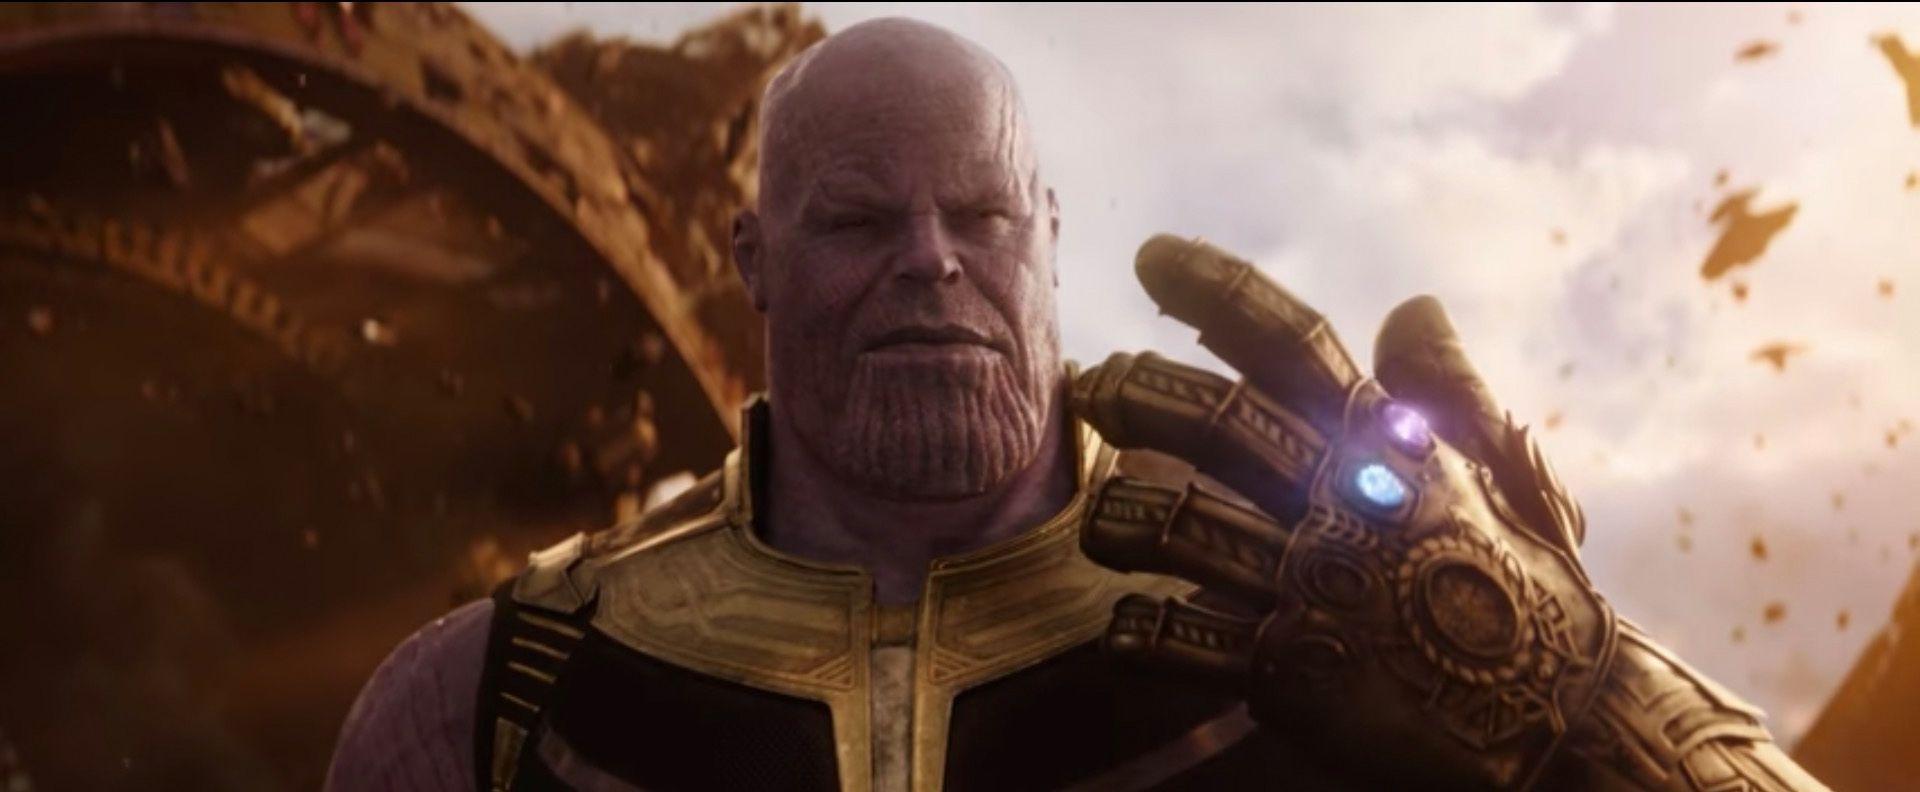 The Avengers: Infinity War VFX team just made Thanos's finger snap